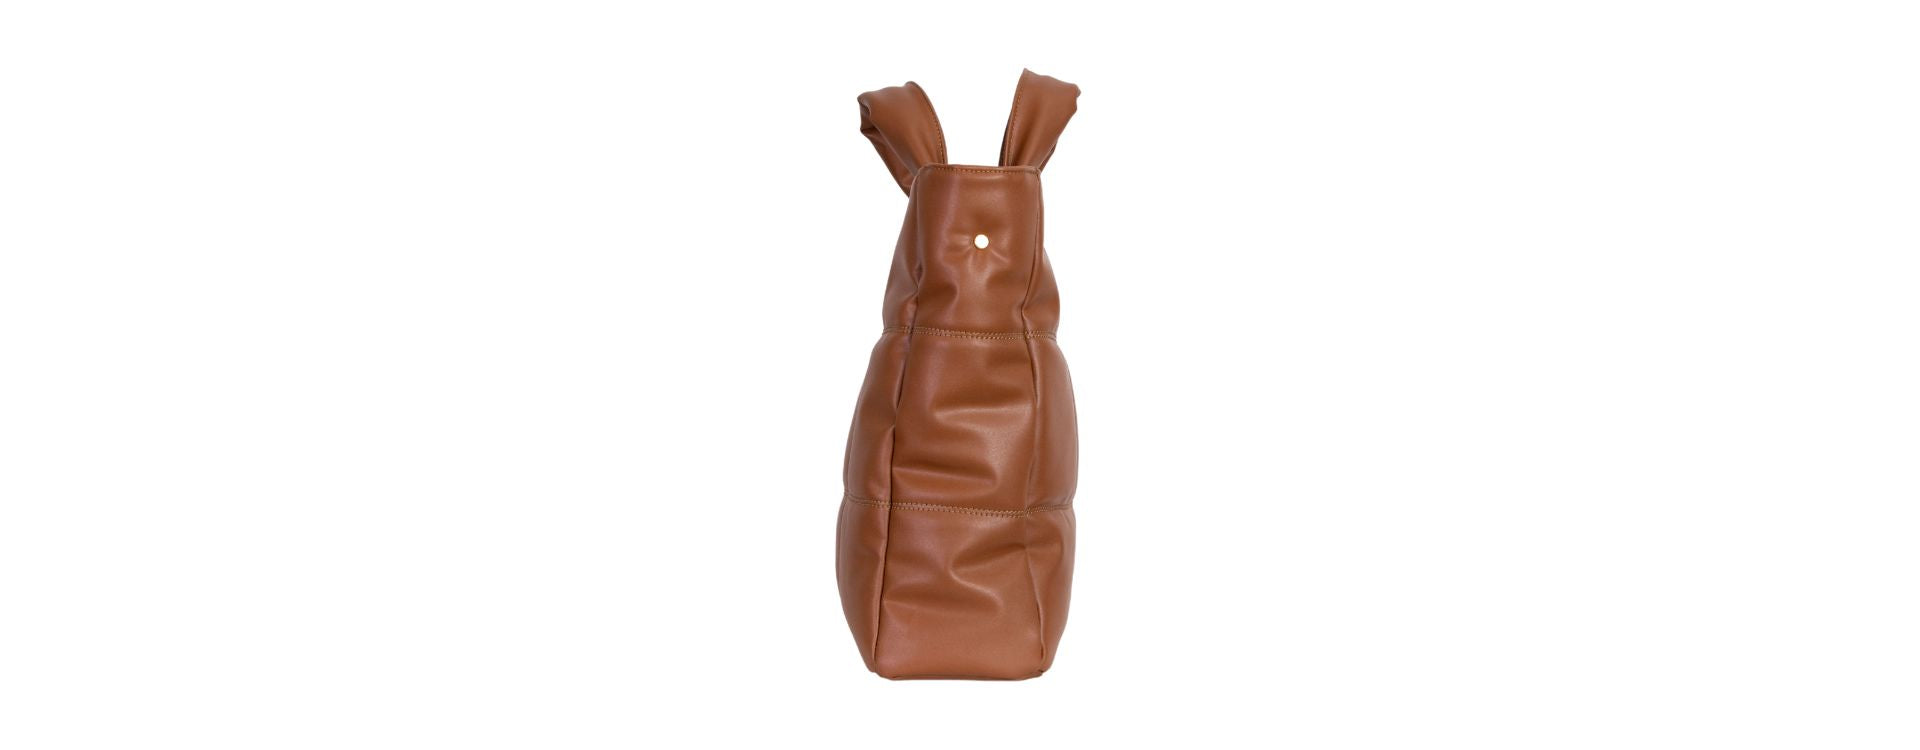 vegan pillow bag Linn from nuuwai in caramel brown with details